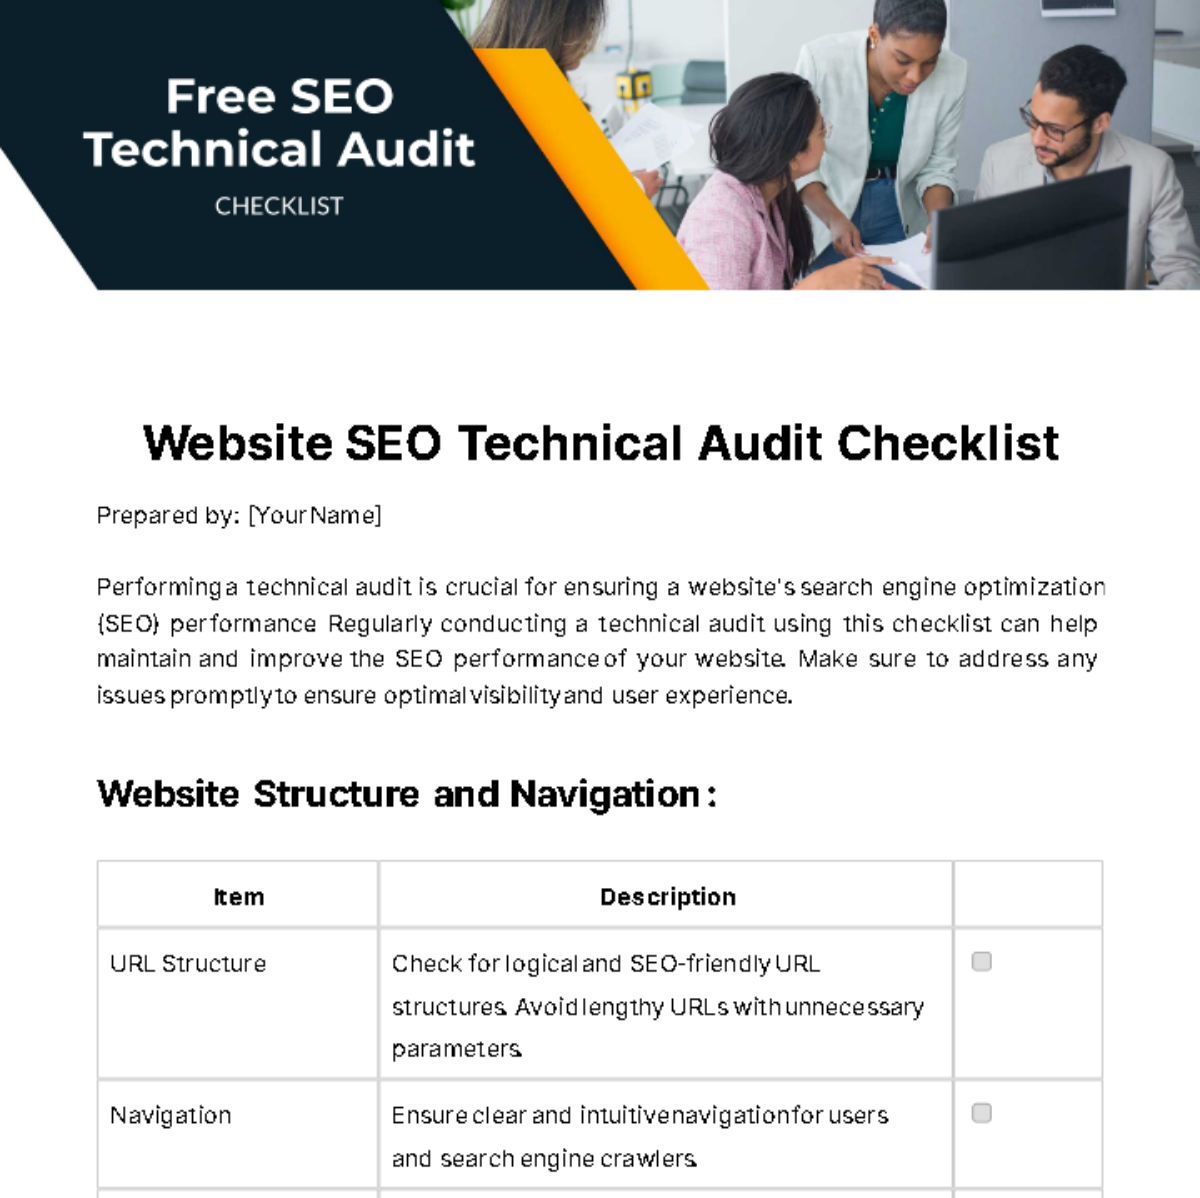 SEO Technical Audit Checklist Template